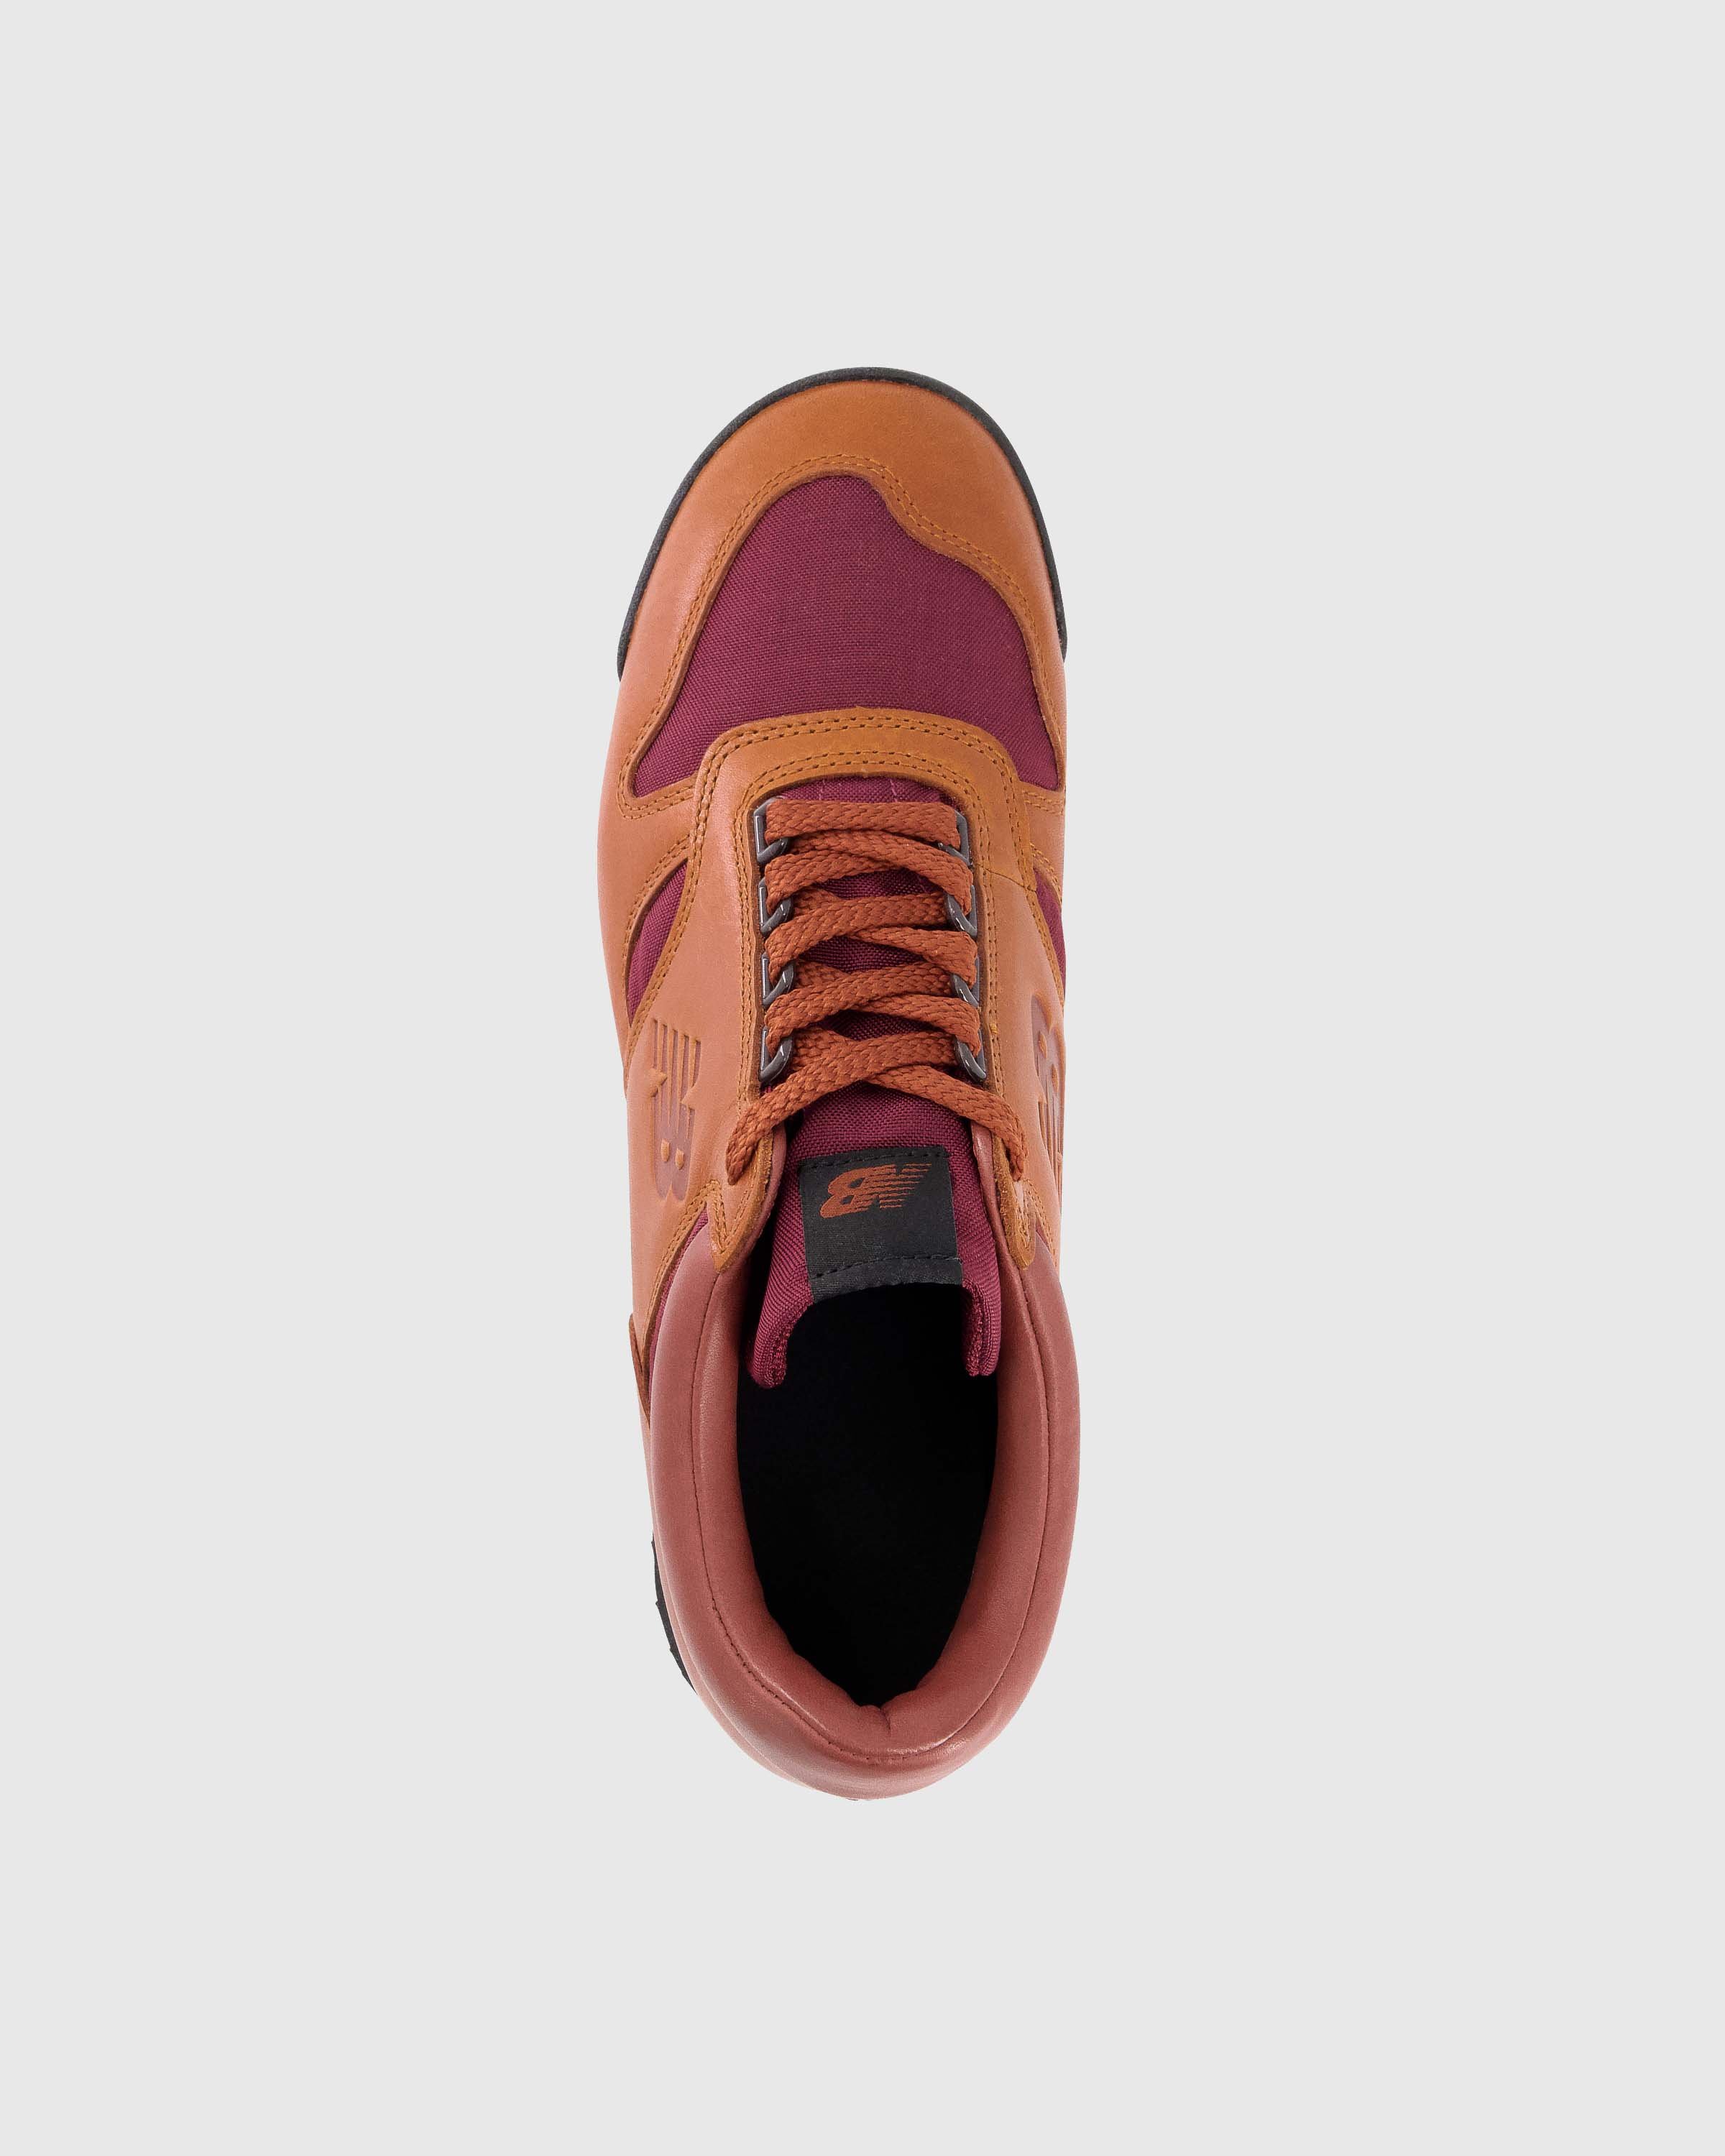 New Balance - UALGSOG Tan - Footwear - Brown - Image 6